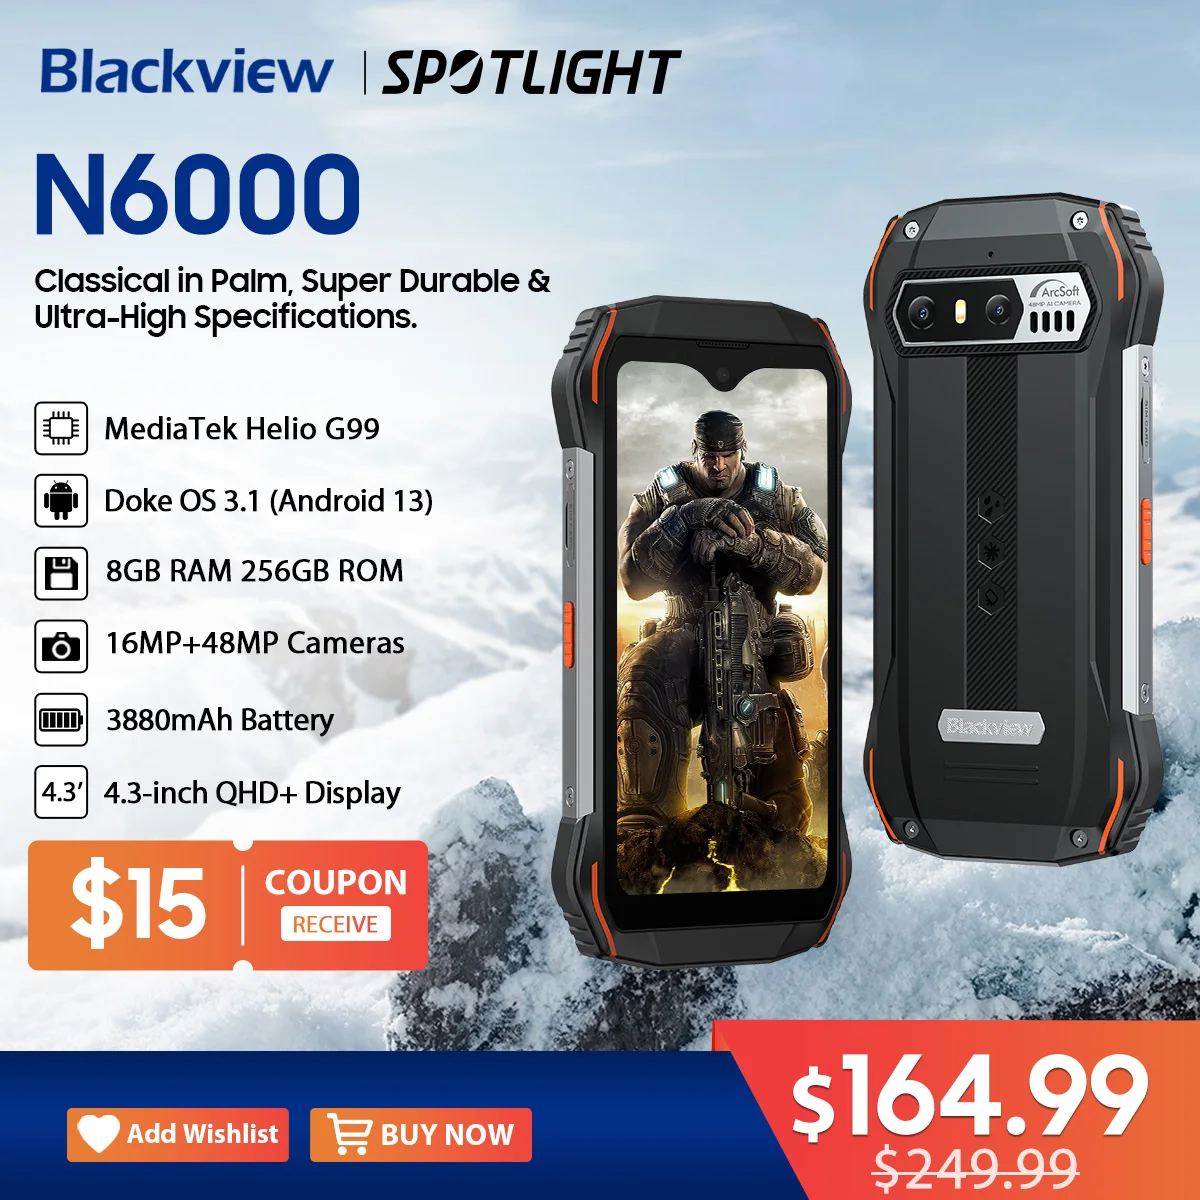 Blackview N6000: Price, specs and best deals